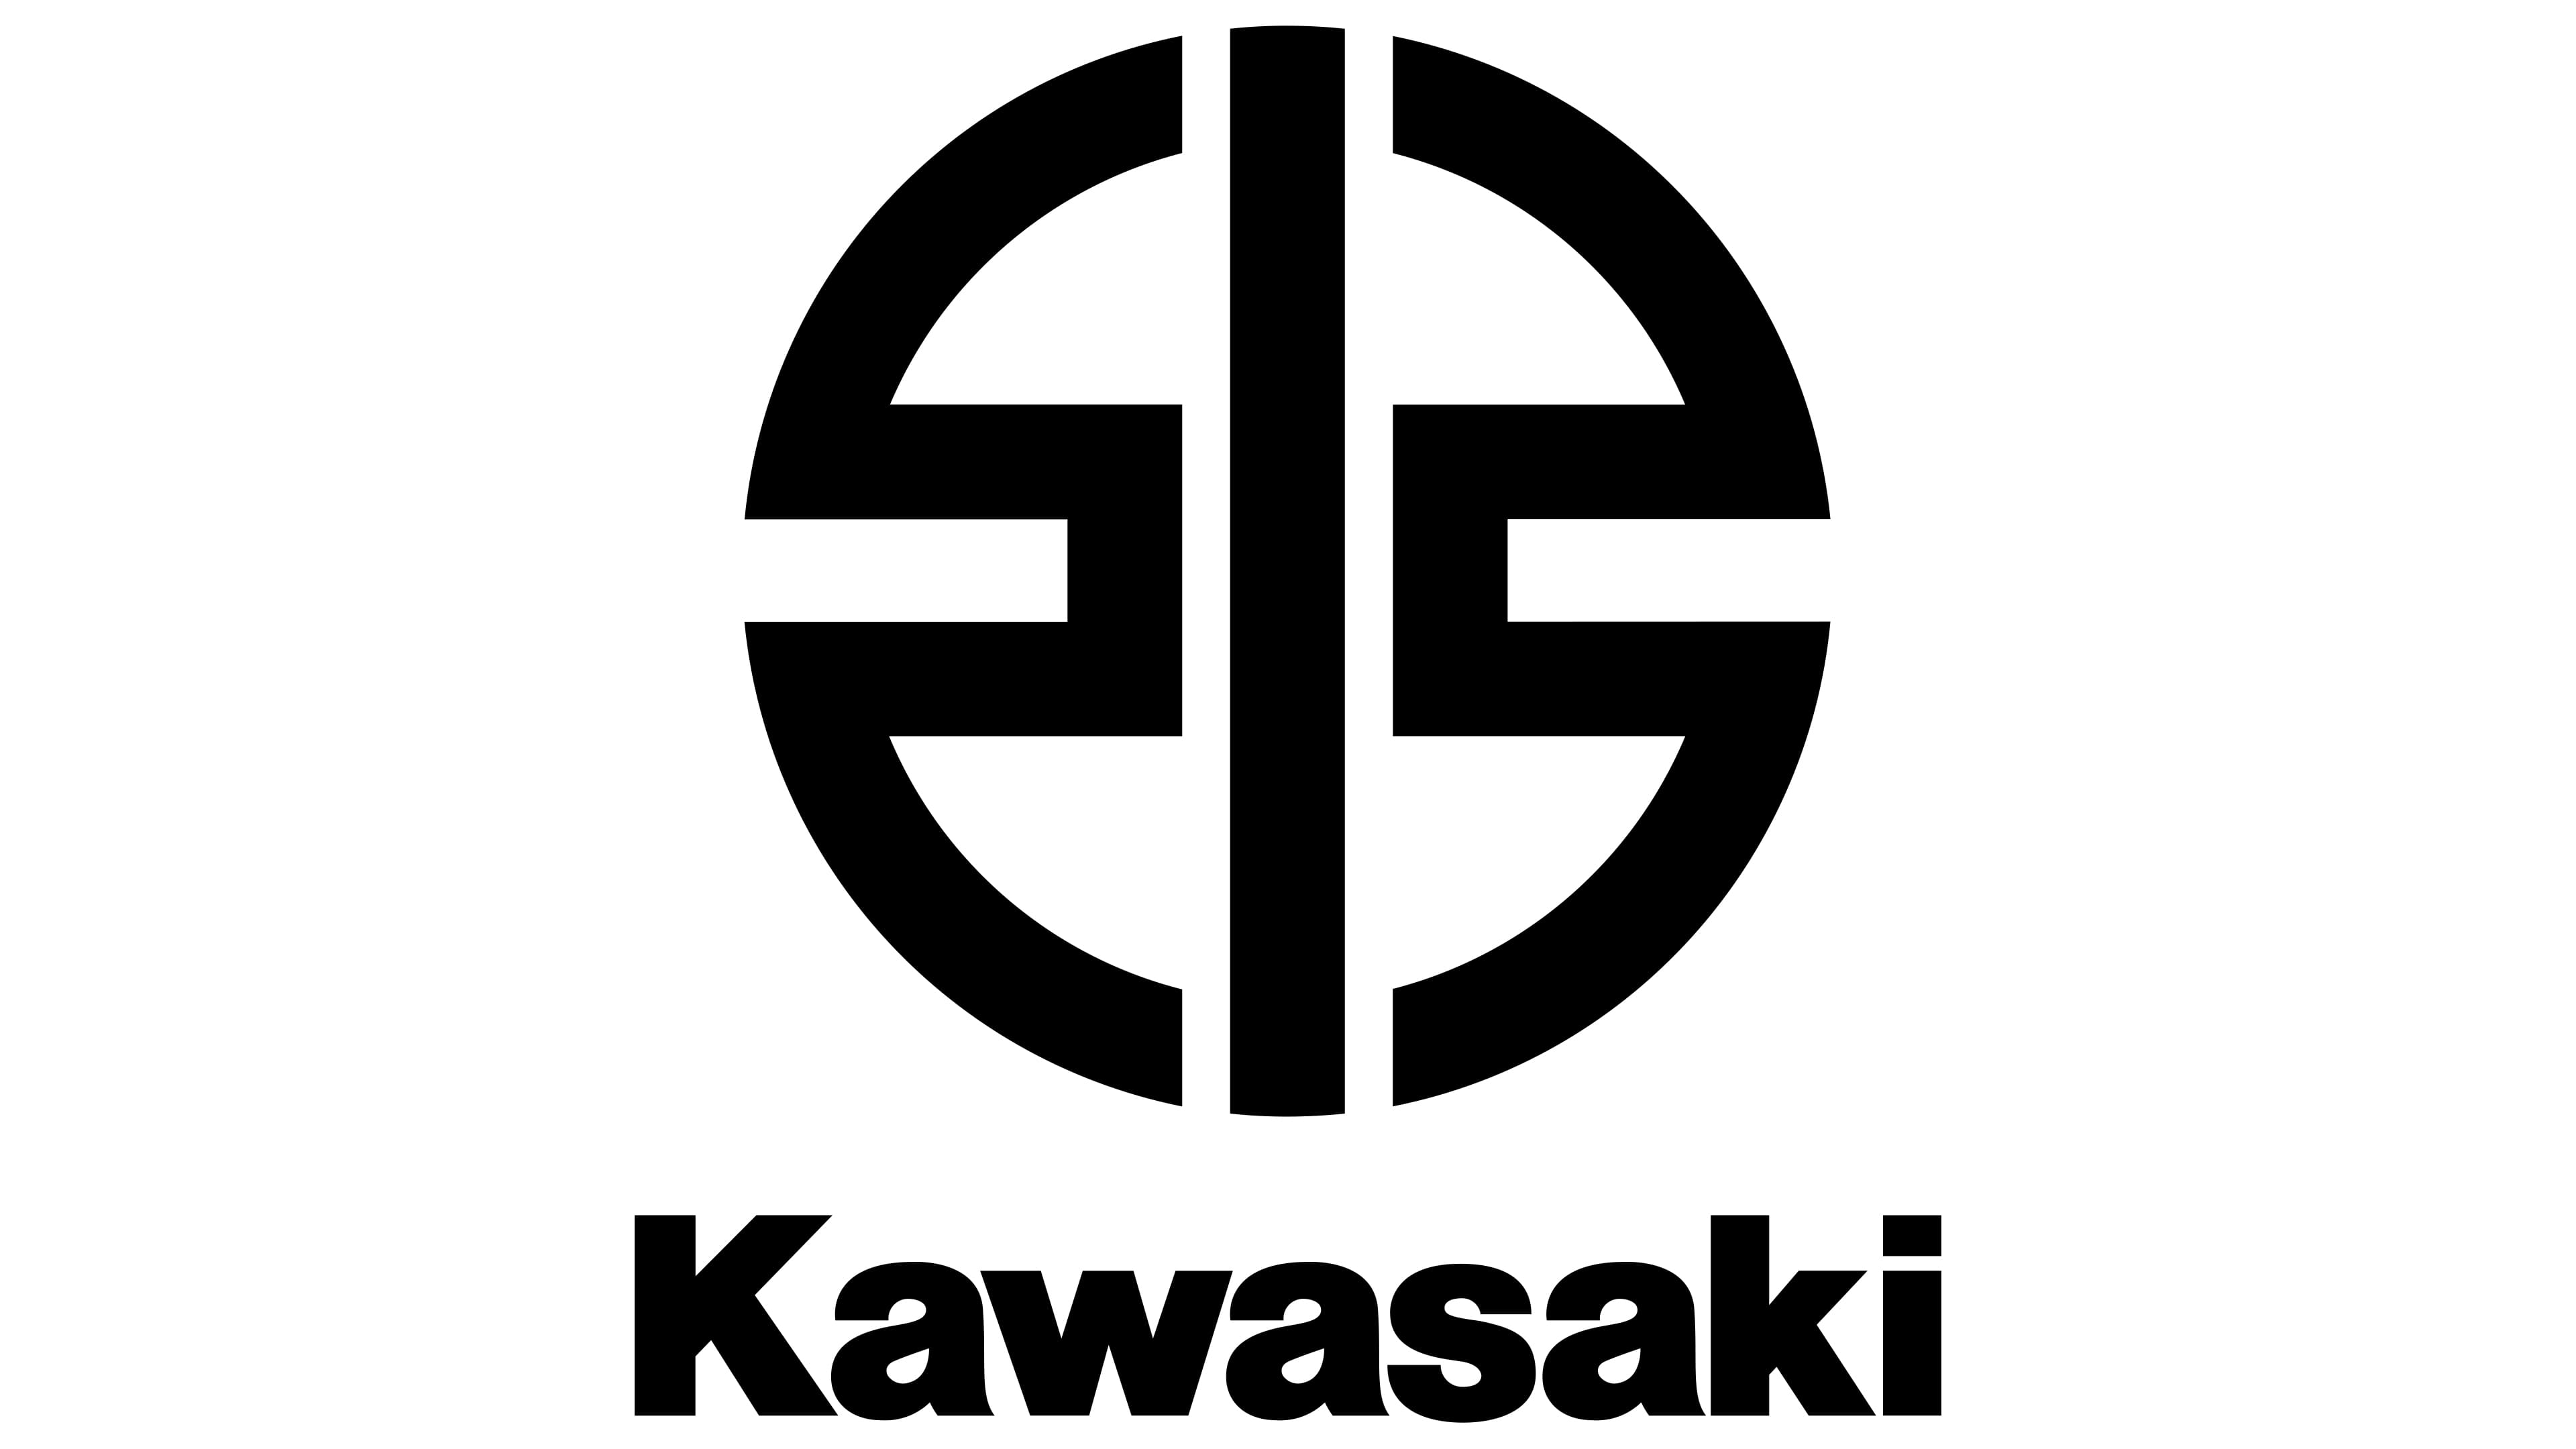 Suzuki brand logo symbol black design japan car Vector Image